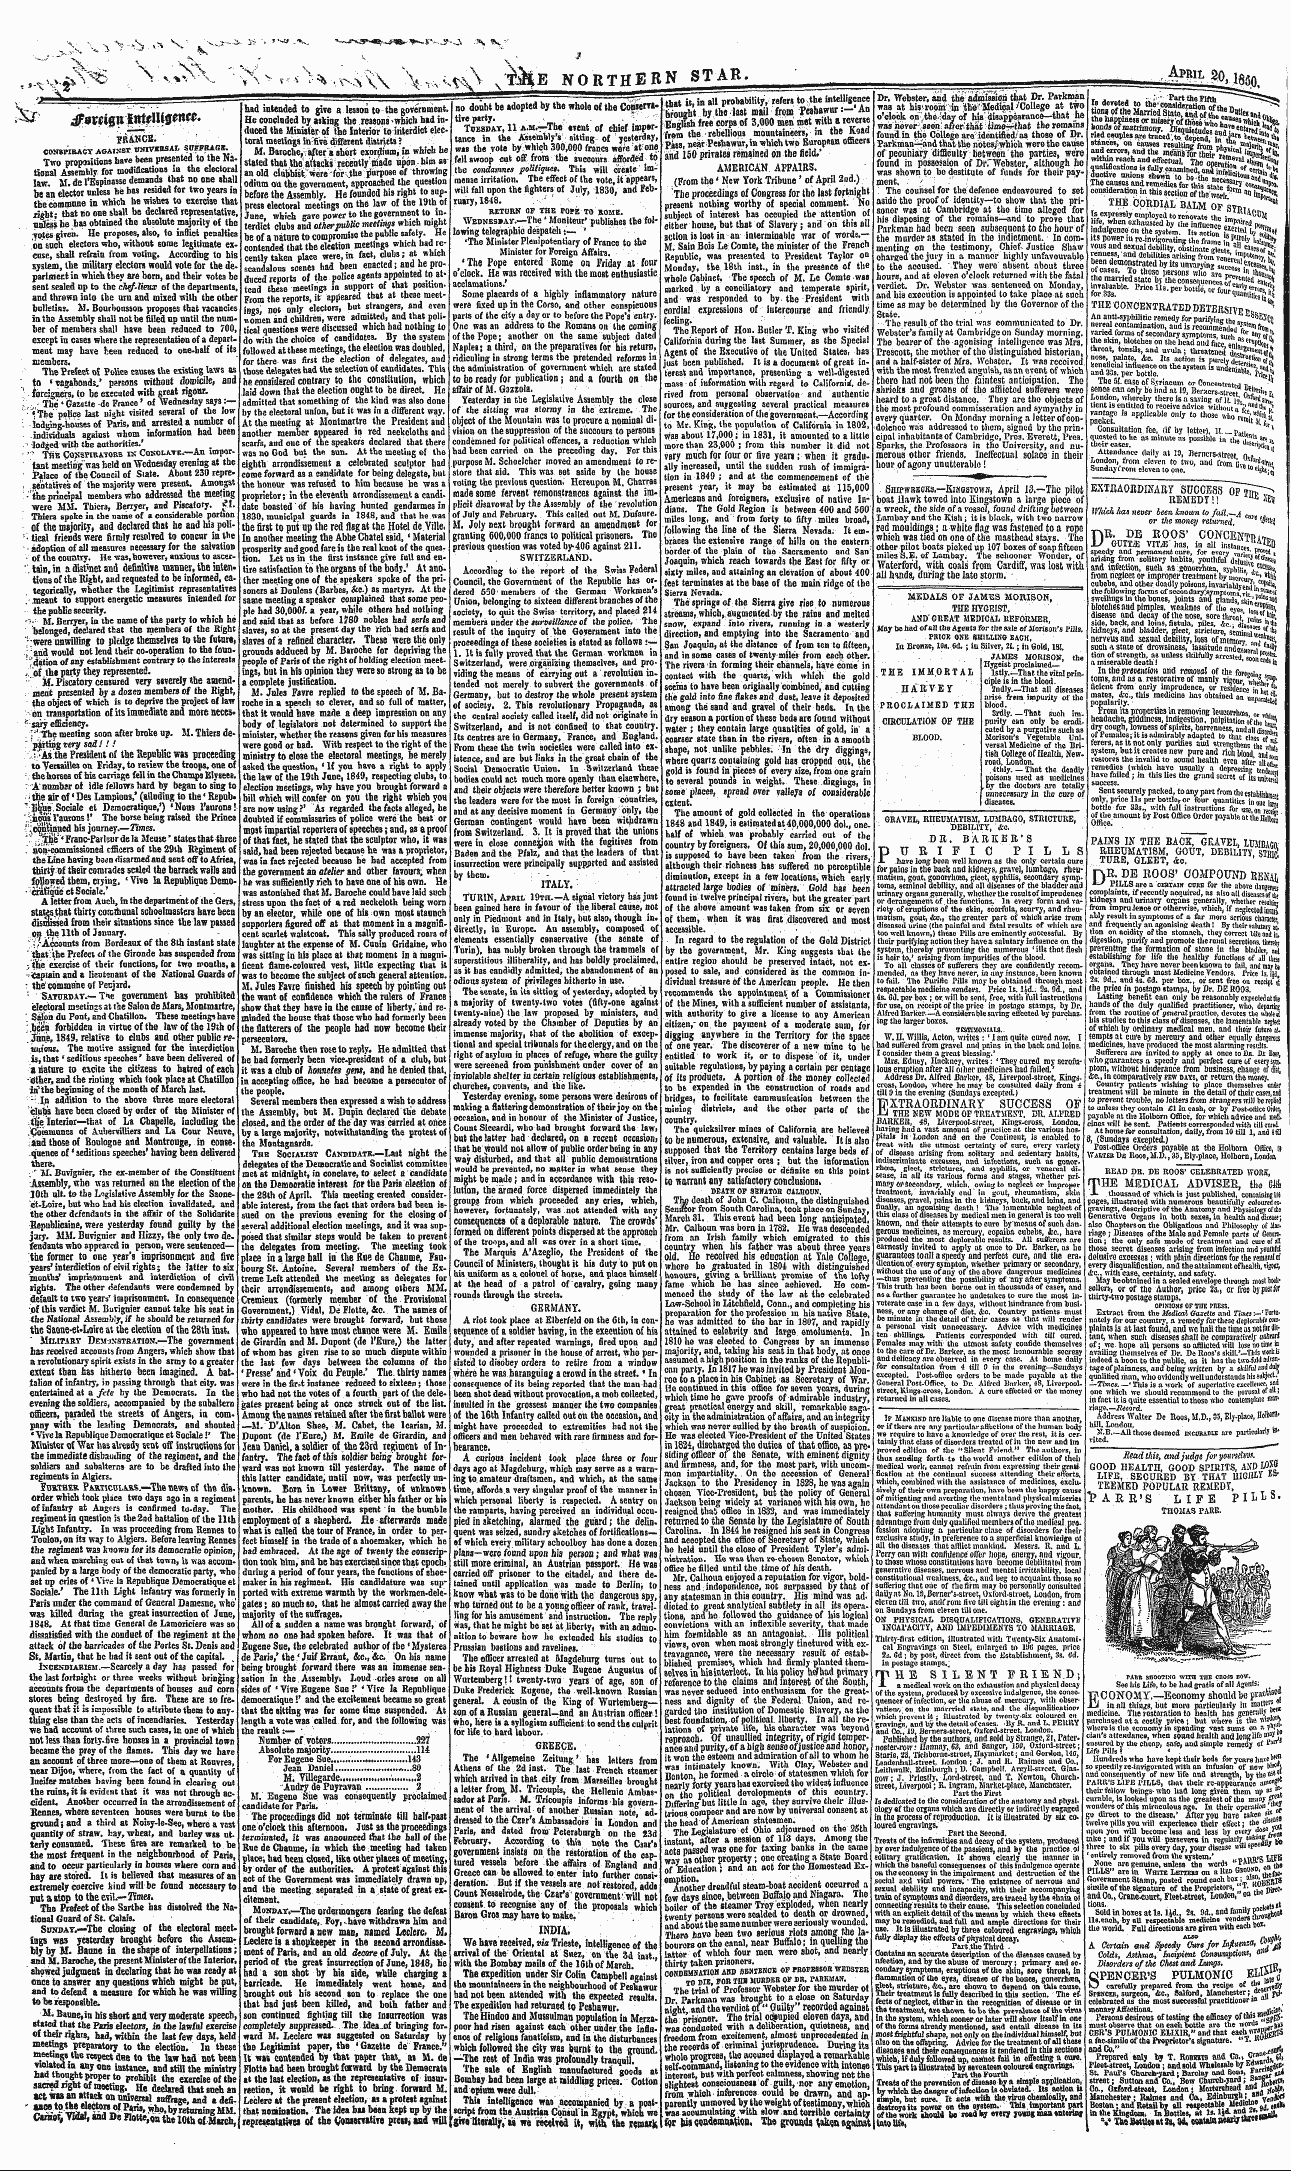 Northern Star (1837-1852): jS F Y, 3rd edition - Ad00212